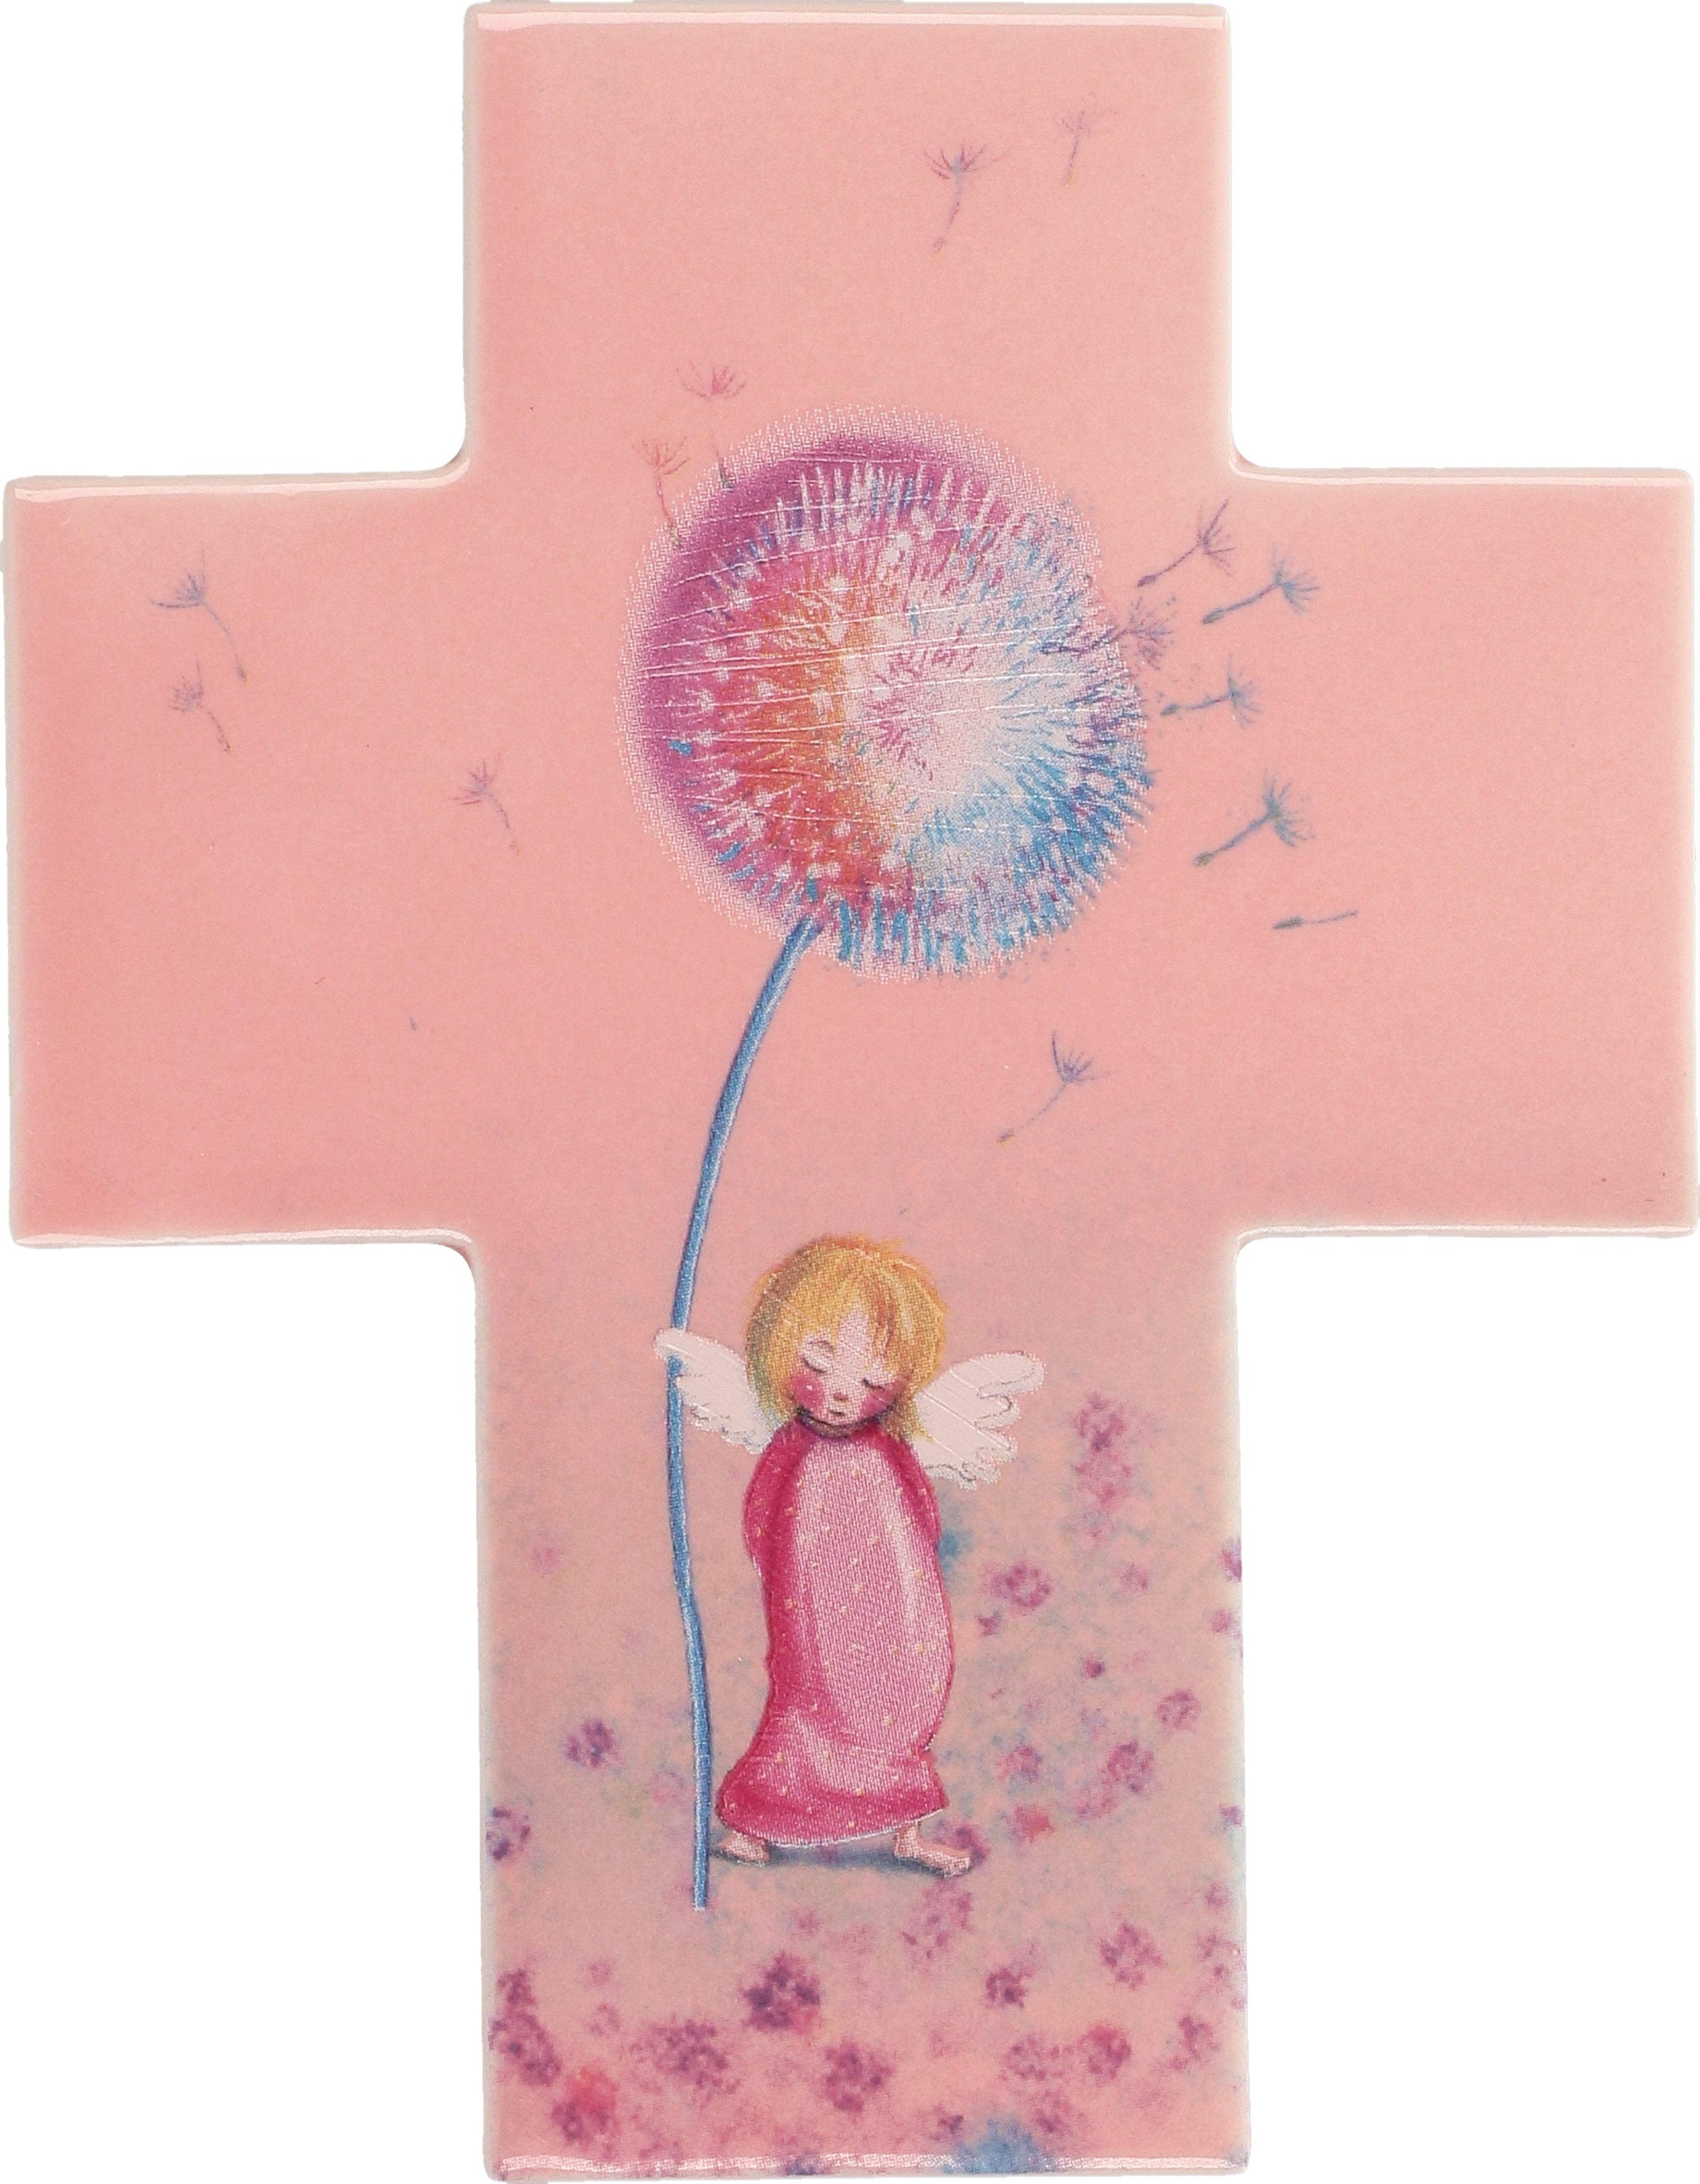 Porzellan Kreuz Engel in rosa und blau-Butzon & Bercker-Kommuniongeschenke,Kreuze